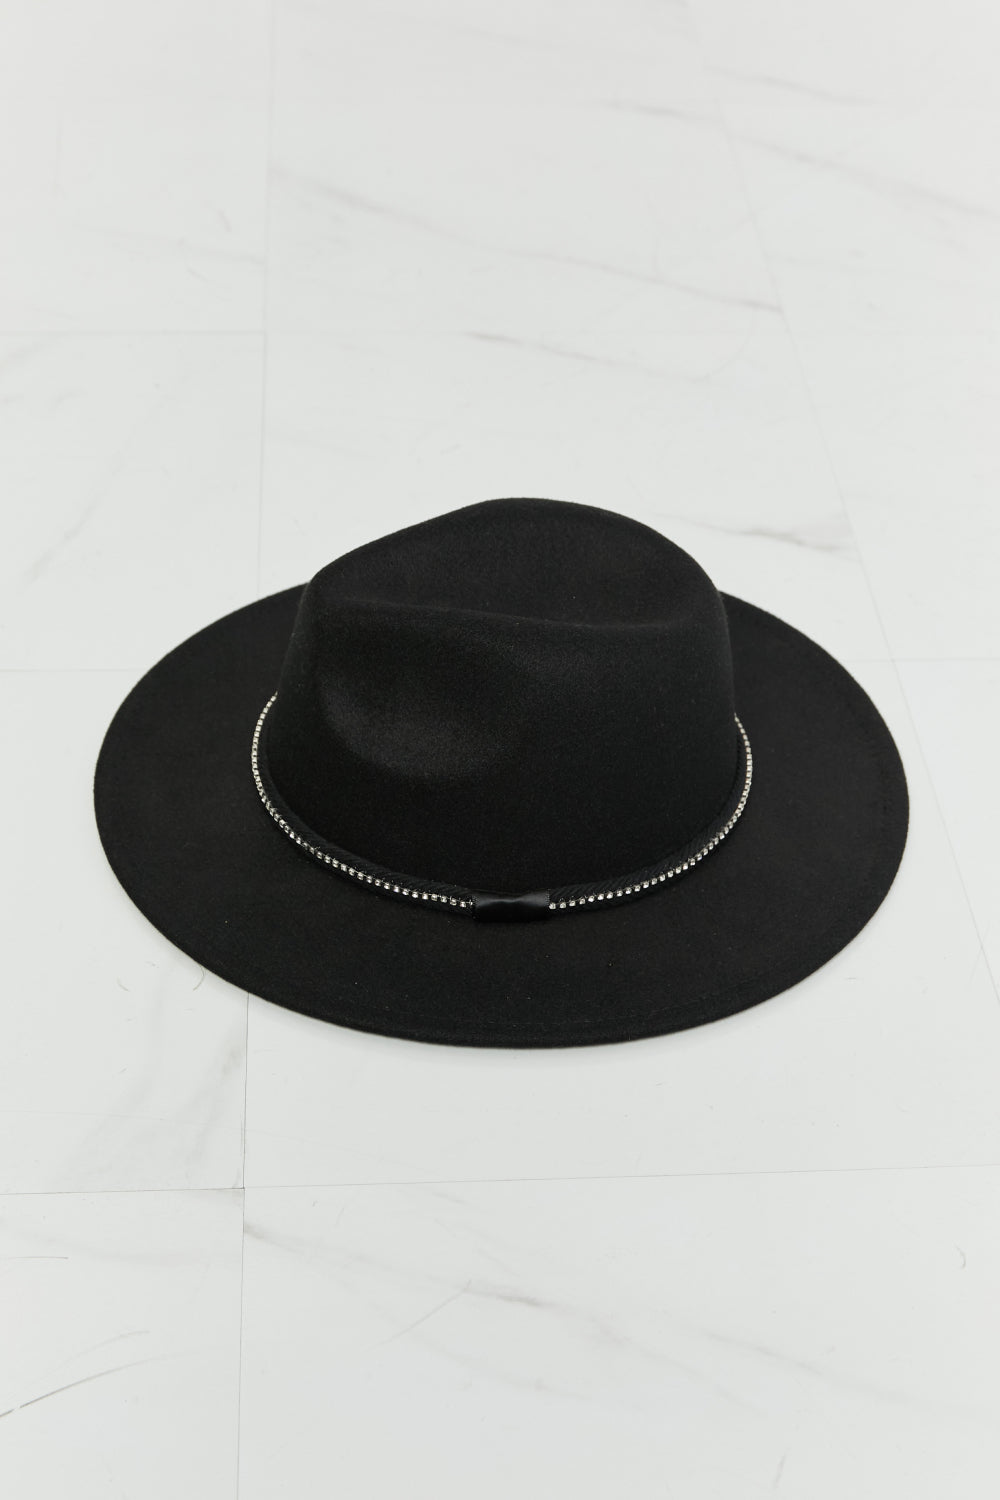 Fame Bring It Back Fedora Hat - Tigbuls Variety Fashion